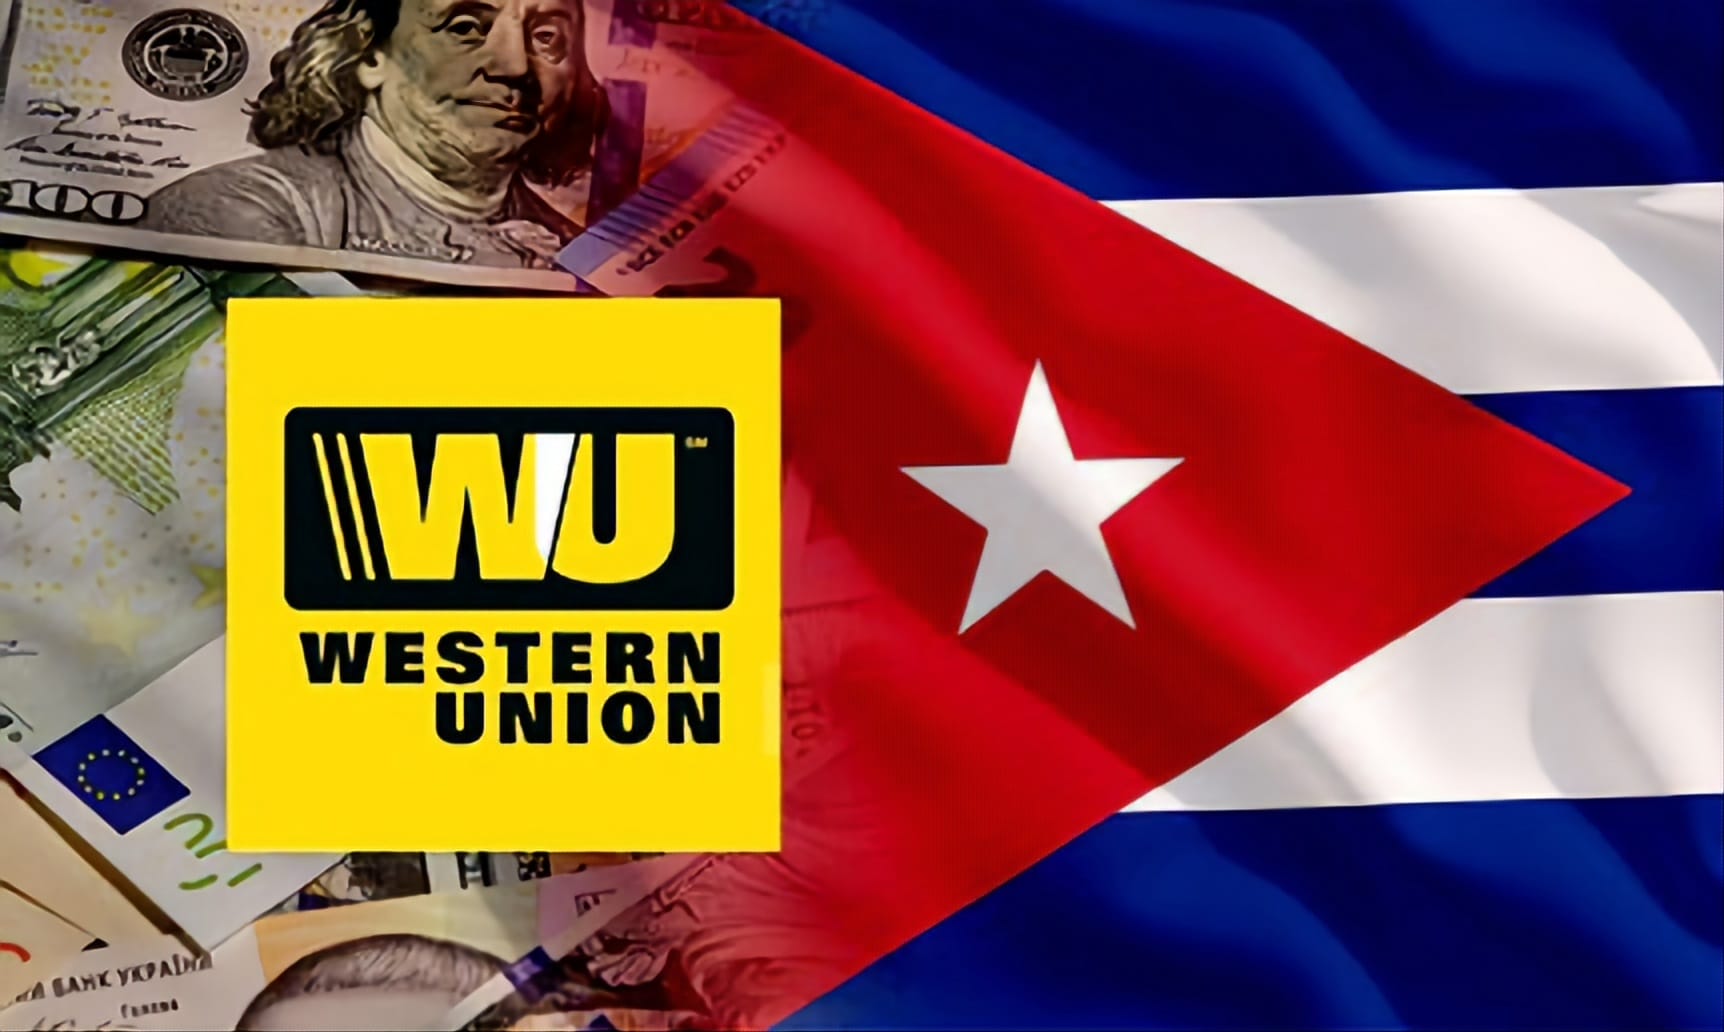 Western Union explains information about sending money transfers to Cuba